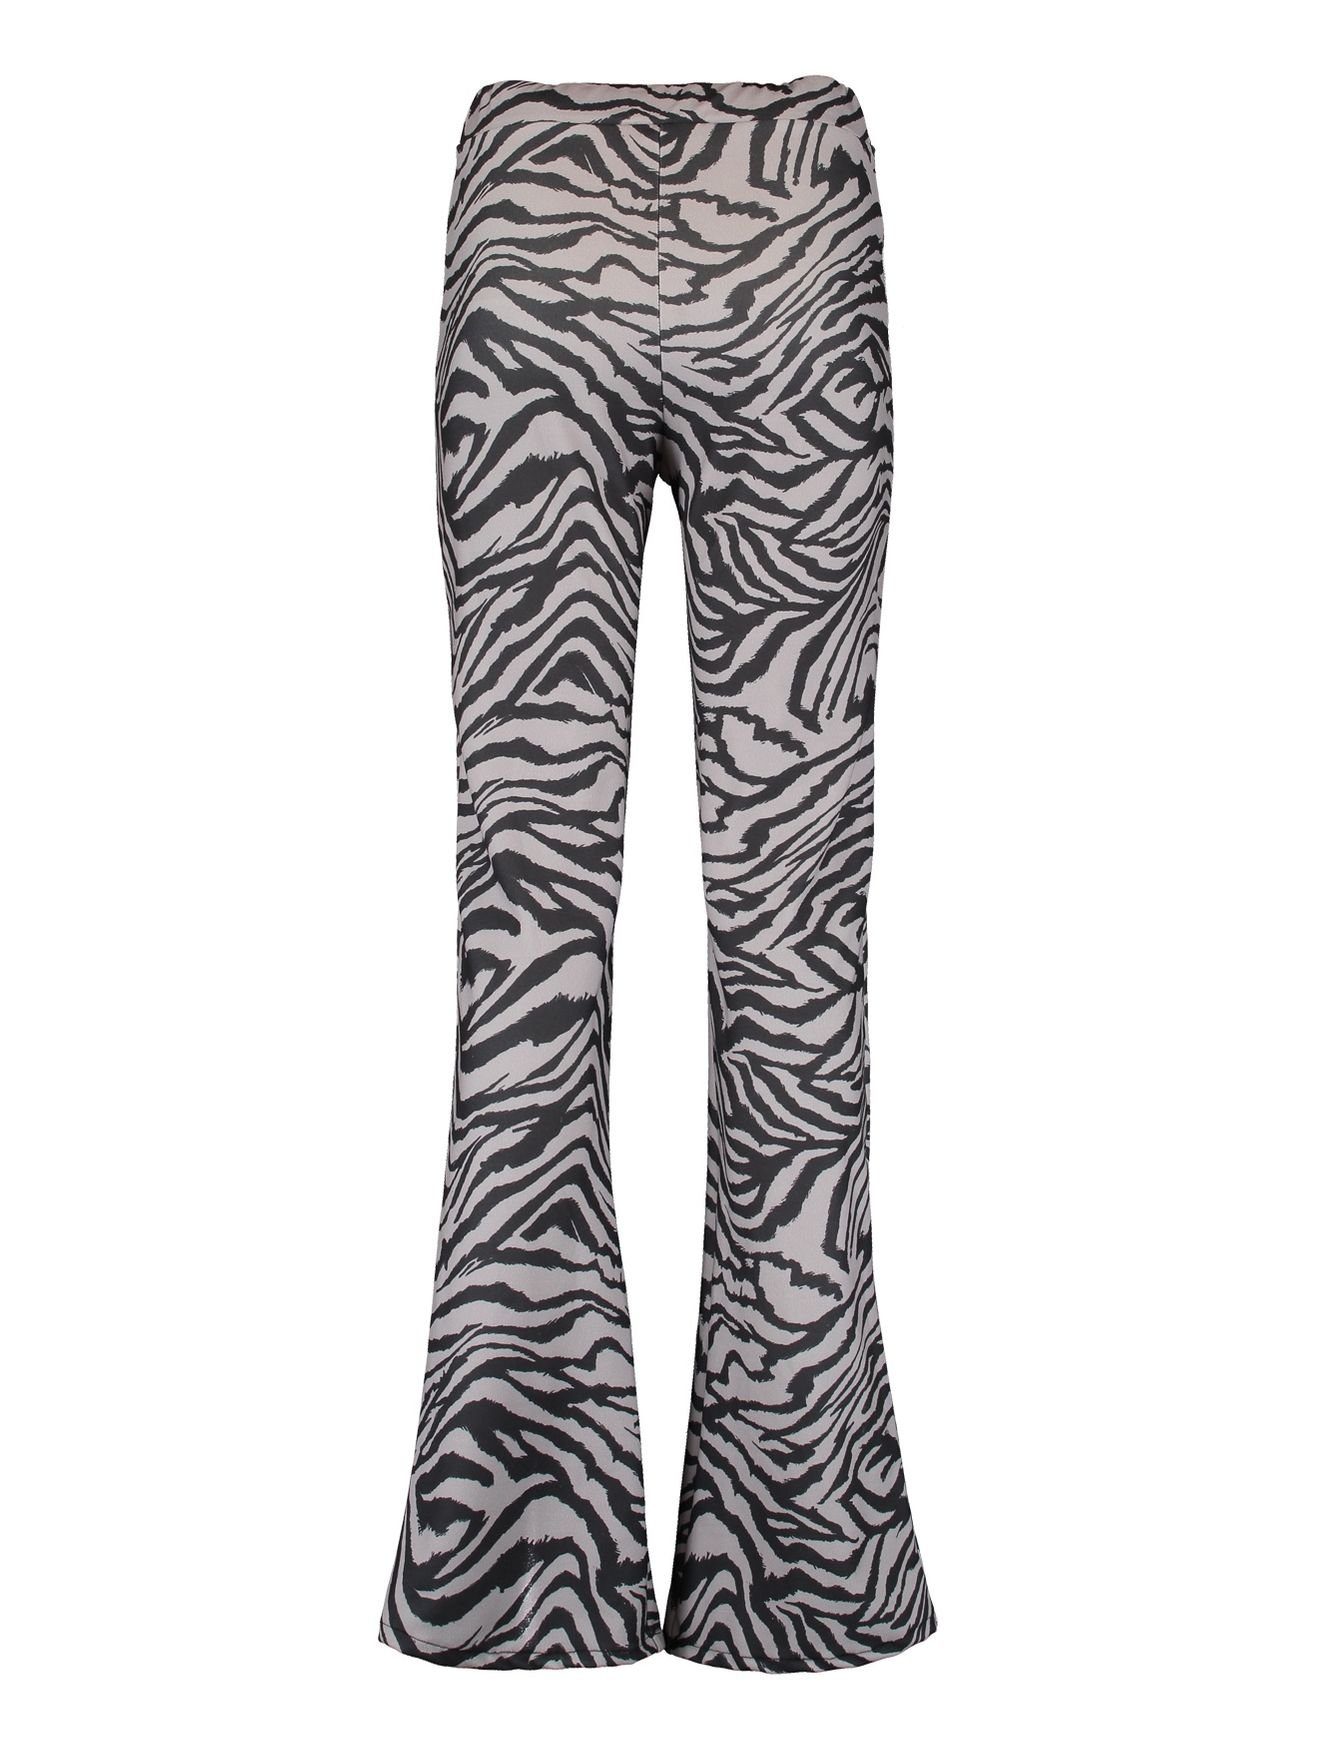 HaILY\'S Stoffhose Flared Bootcut Print Leggings Zebra Animal Hose 5073 Grau in Sinka Stoff